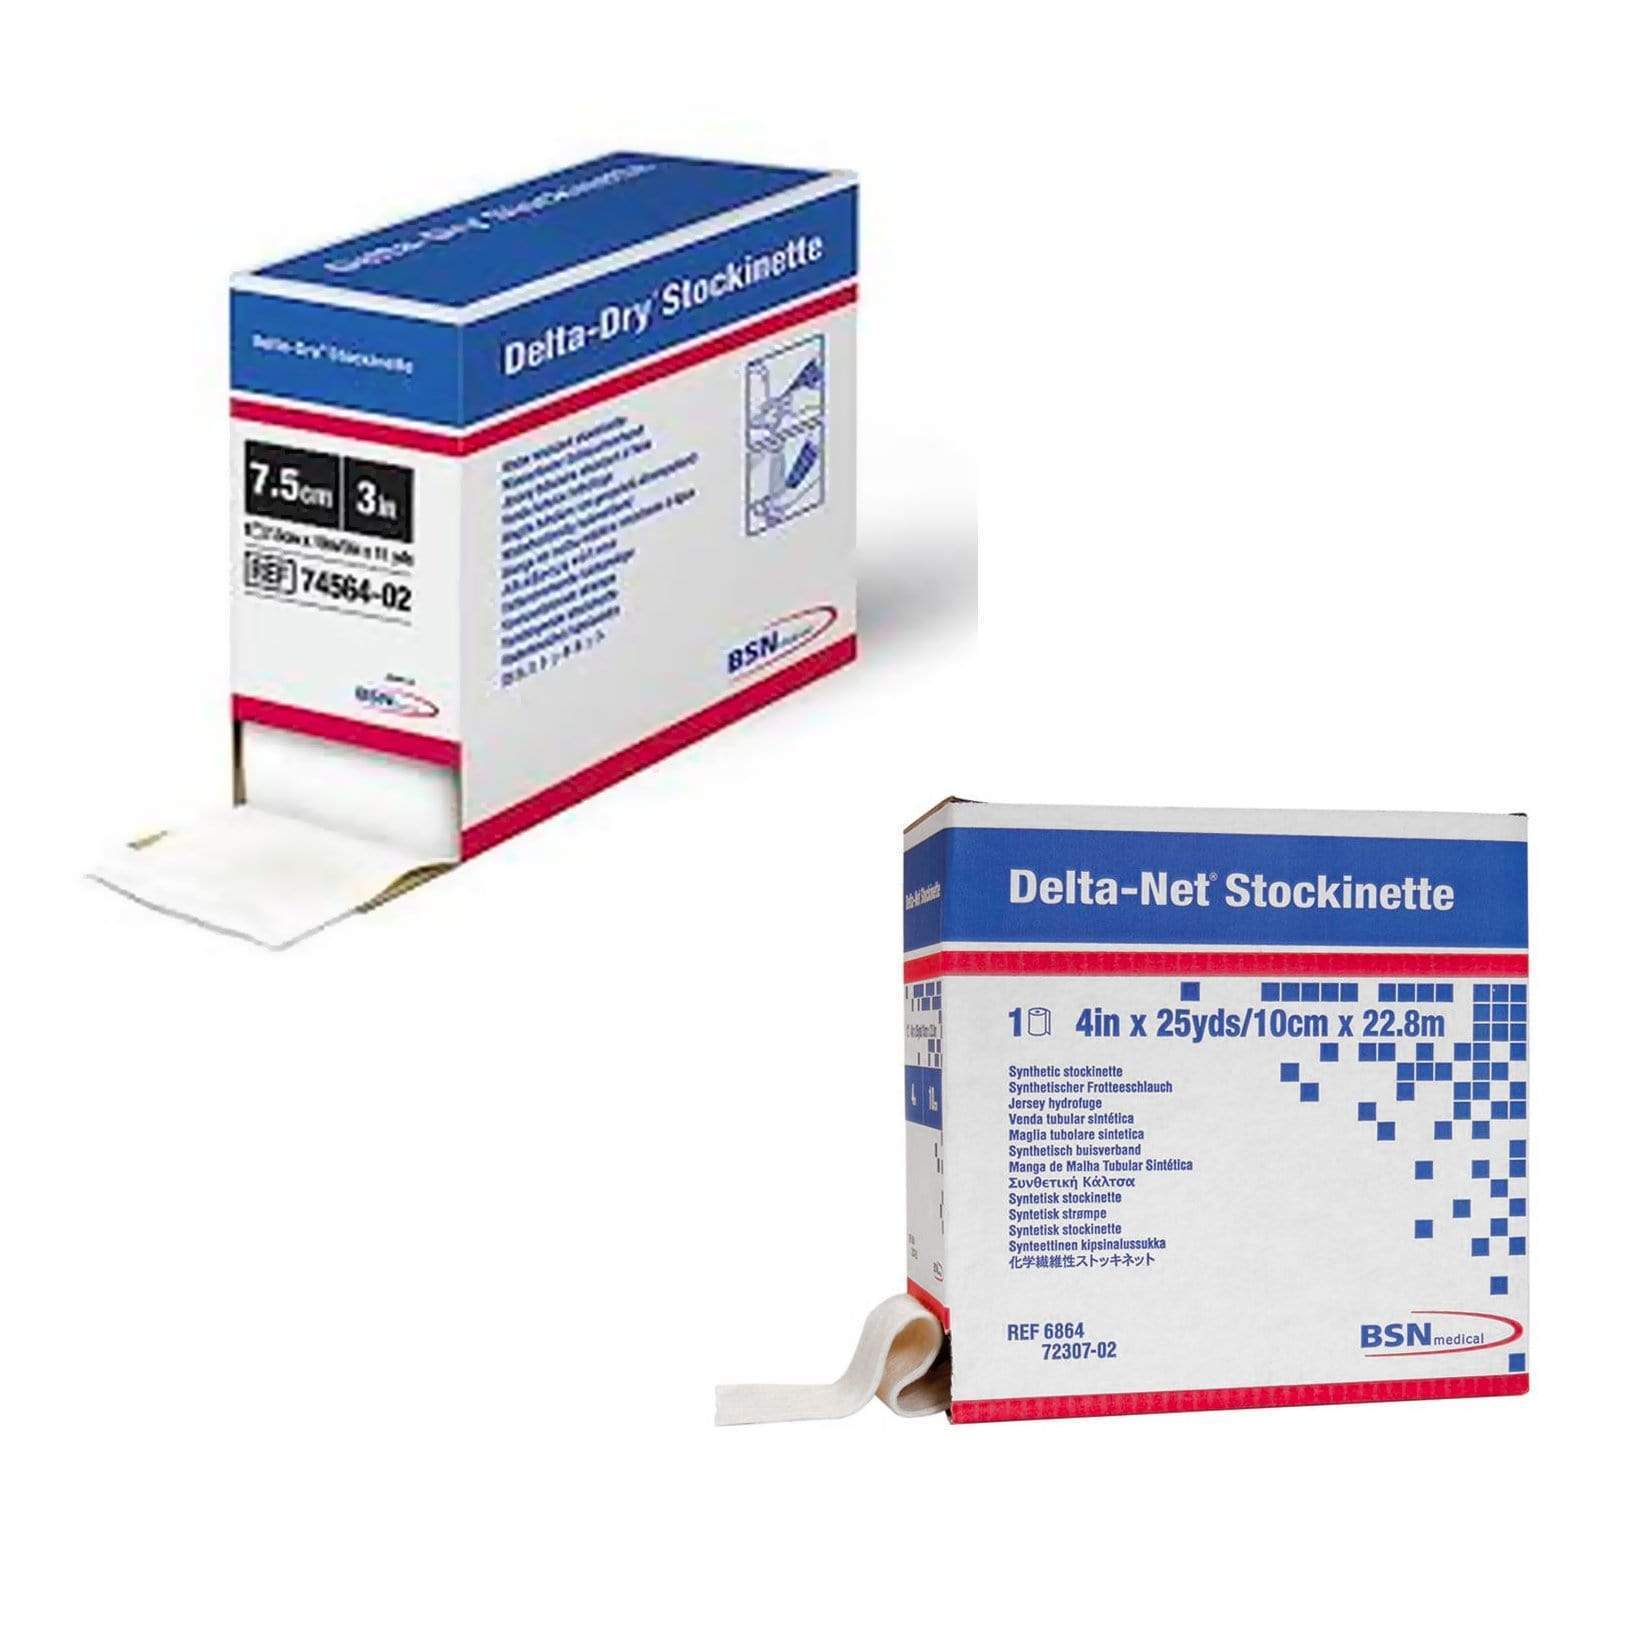 BSN Medical Delta-Dry Stockinette